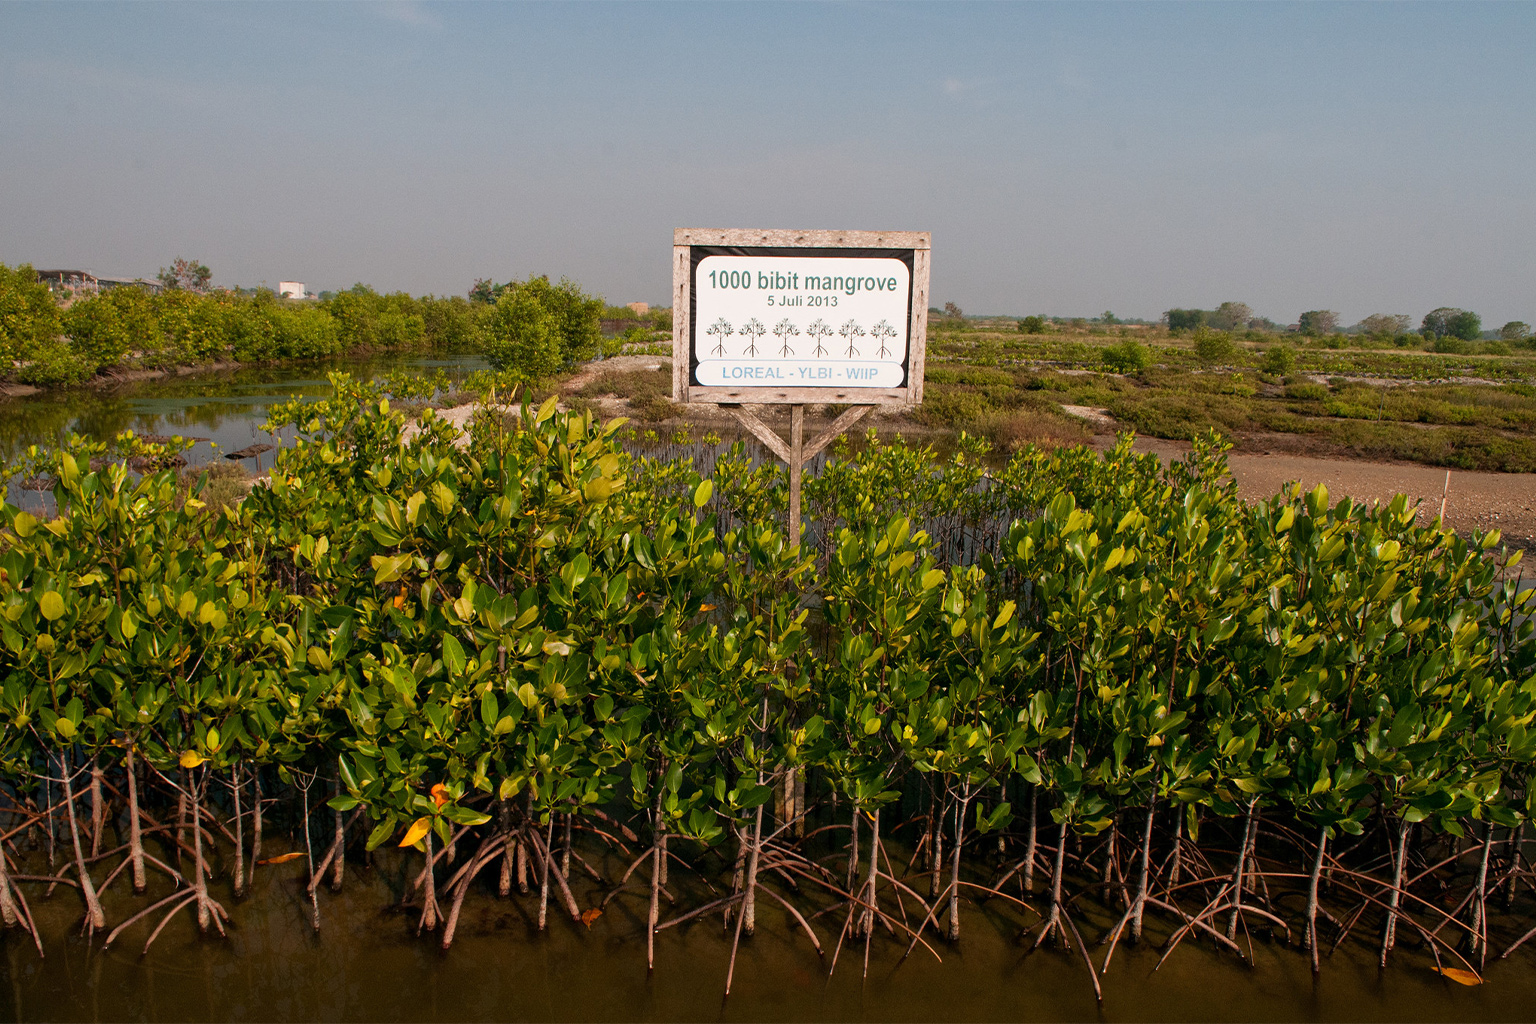 A mangrove nursery 